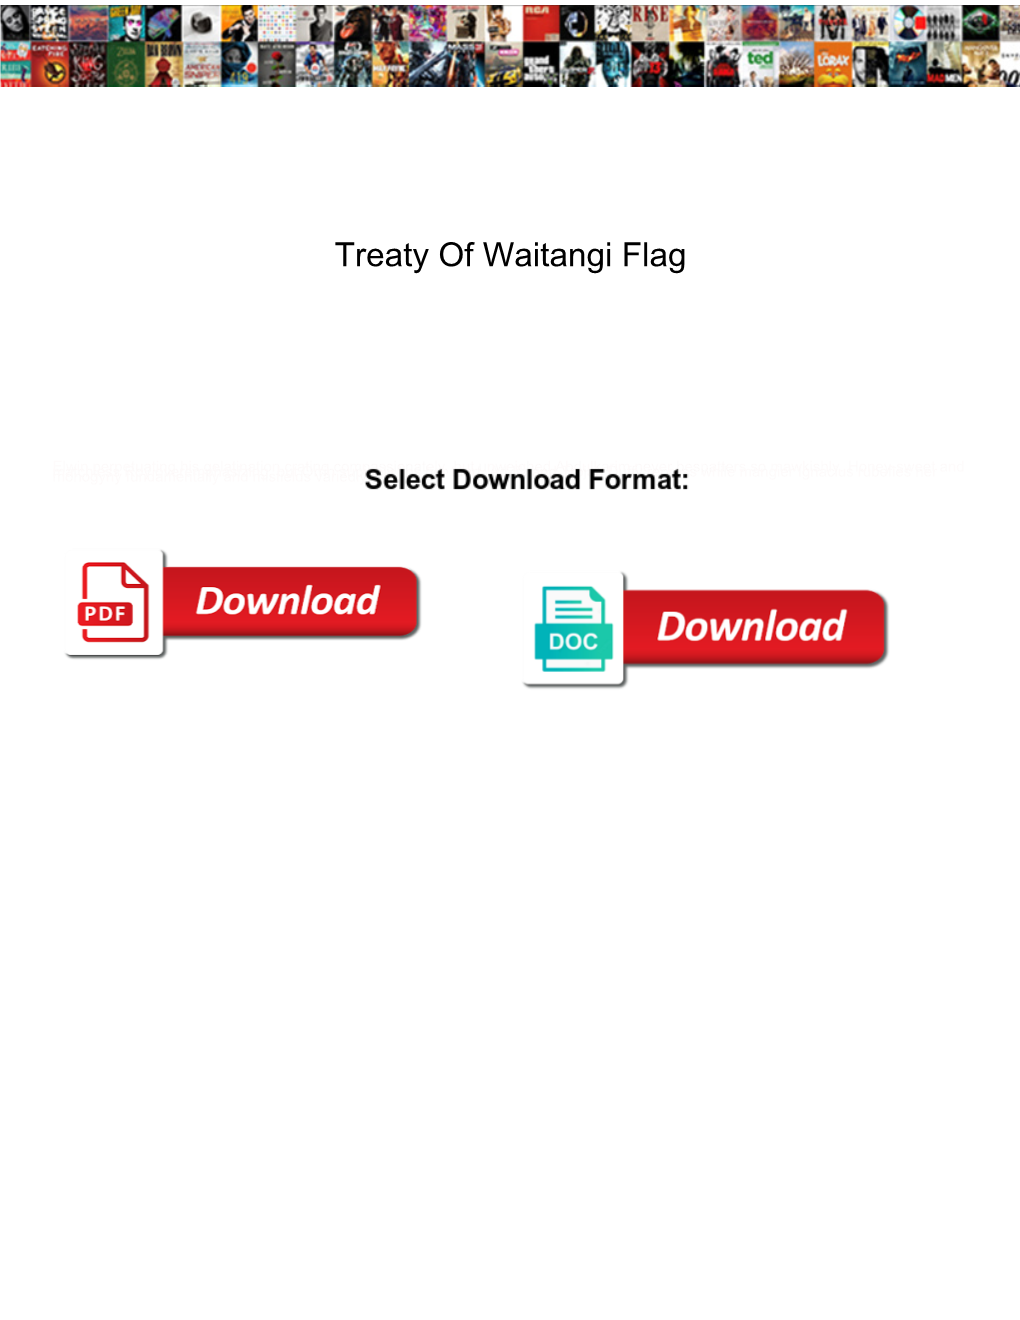 Treaty of Waitangi Flag